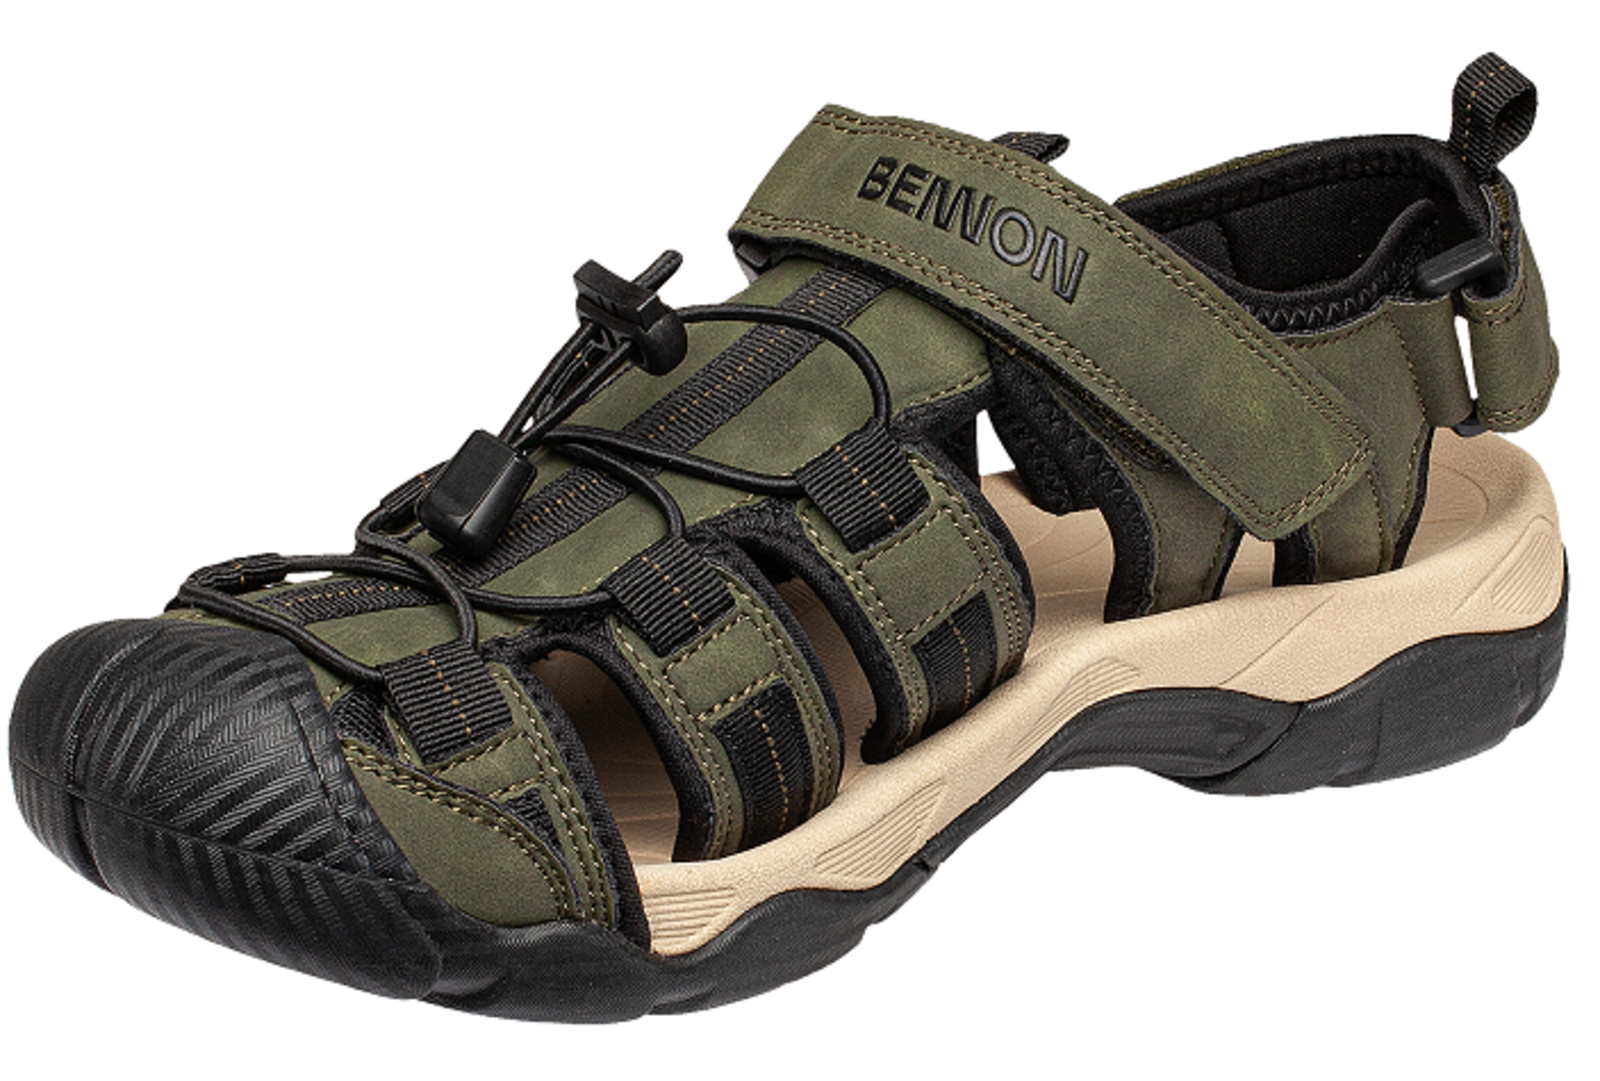 Ľahké sandále Bennon Amazon - veľkosť: 41, farba: zelená